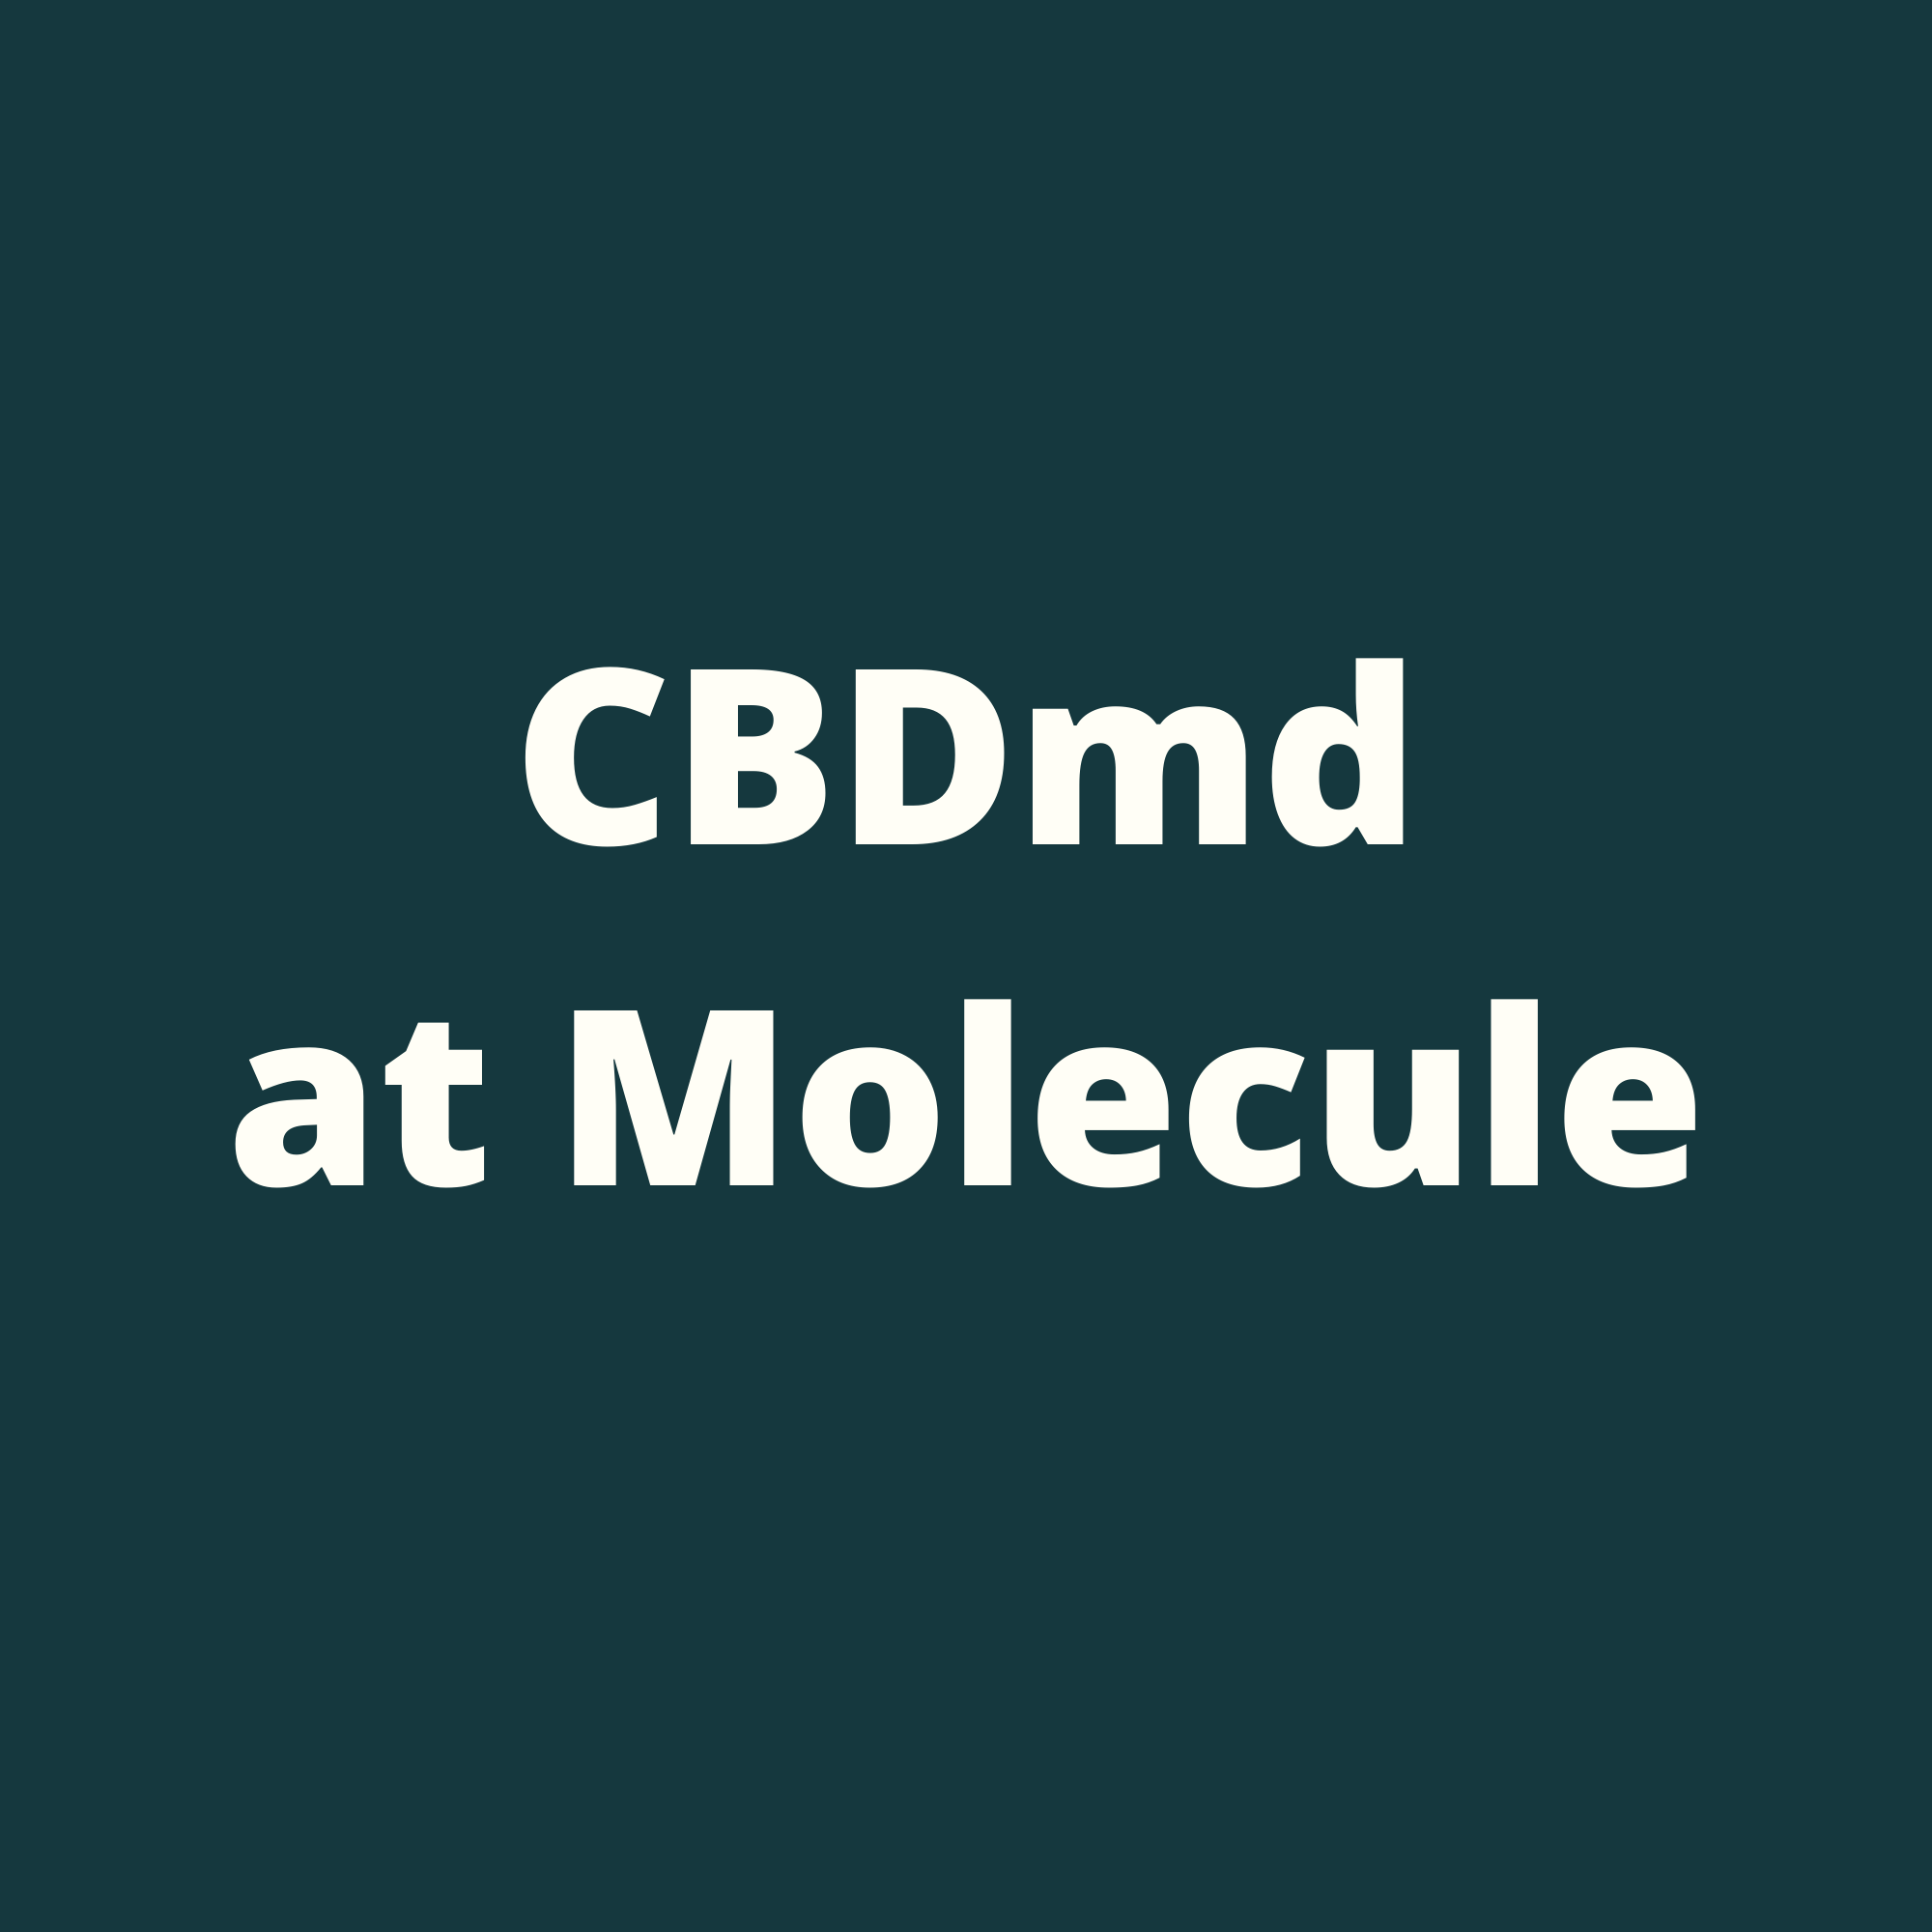 The CBDmd Range at Molecule